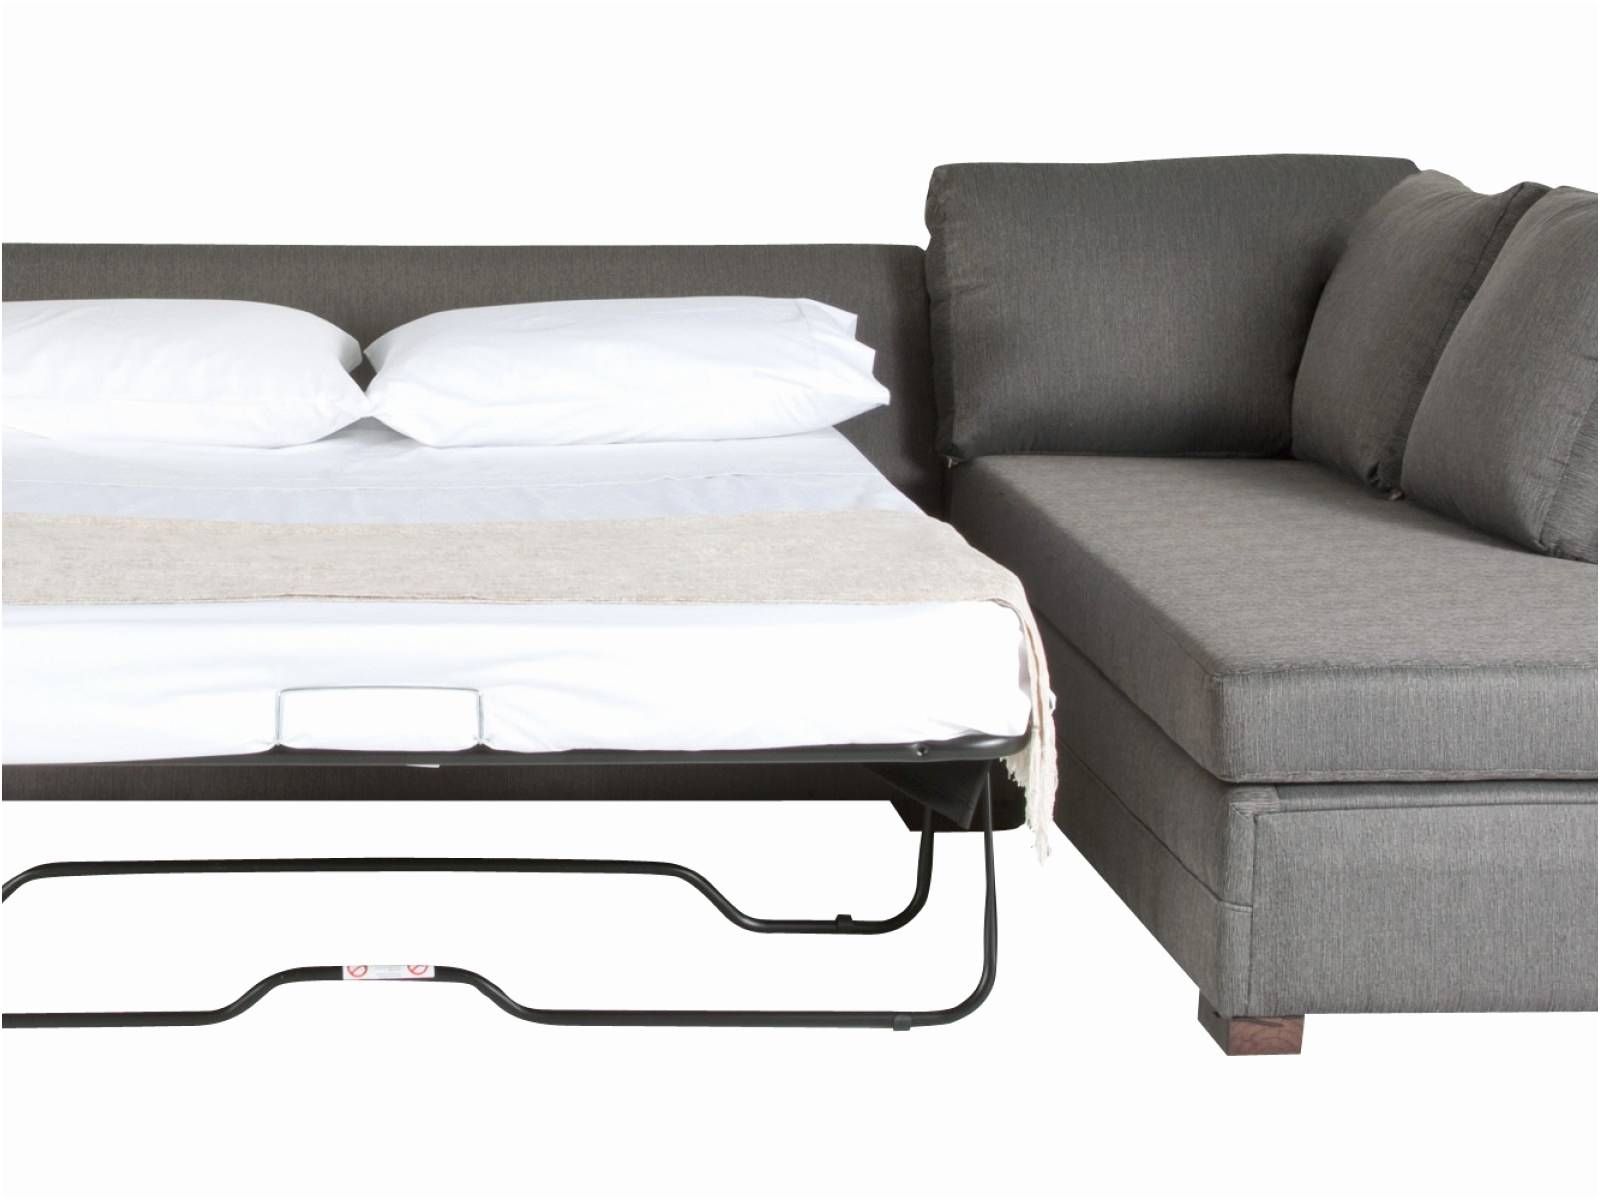 Queen Sofa Bed Sheets | Centerfieldbar In Queen Sleeper Sofa Sheets (View 6 of 15)